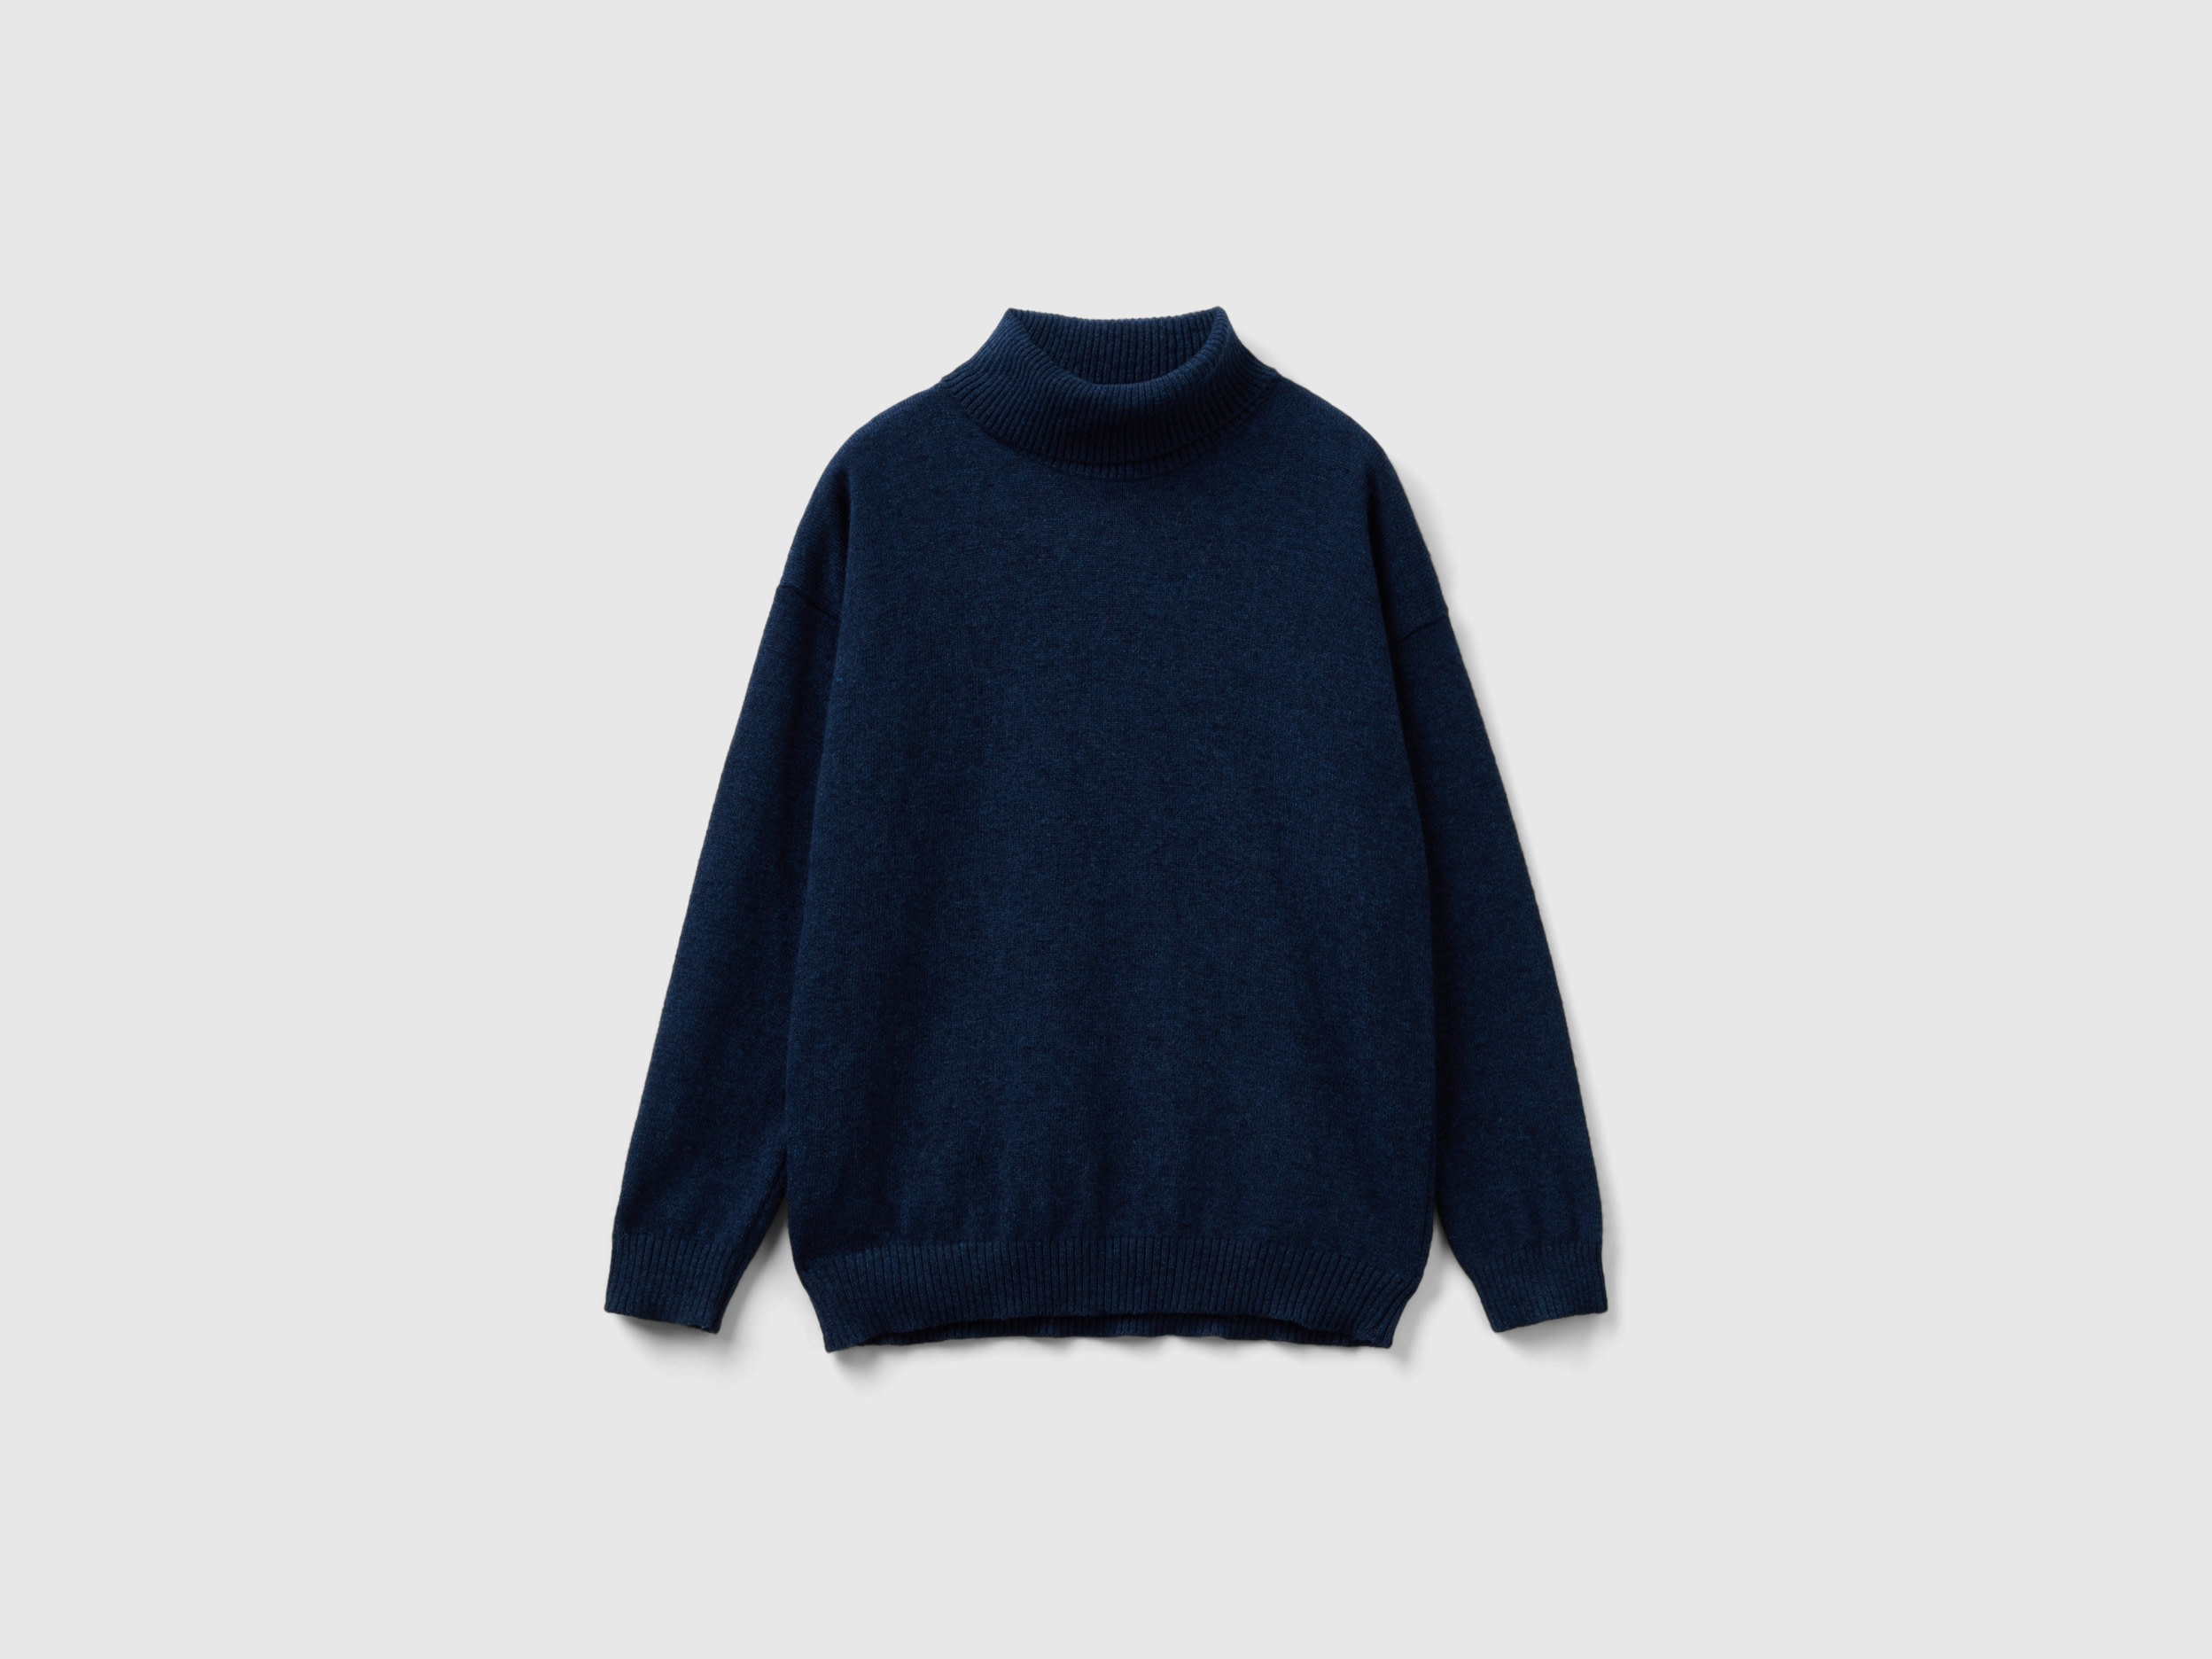 Benetton, Turtleneck Sweater In Cashmere And Wool Blend, size XL, Dark Blue, Kids